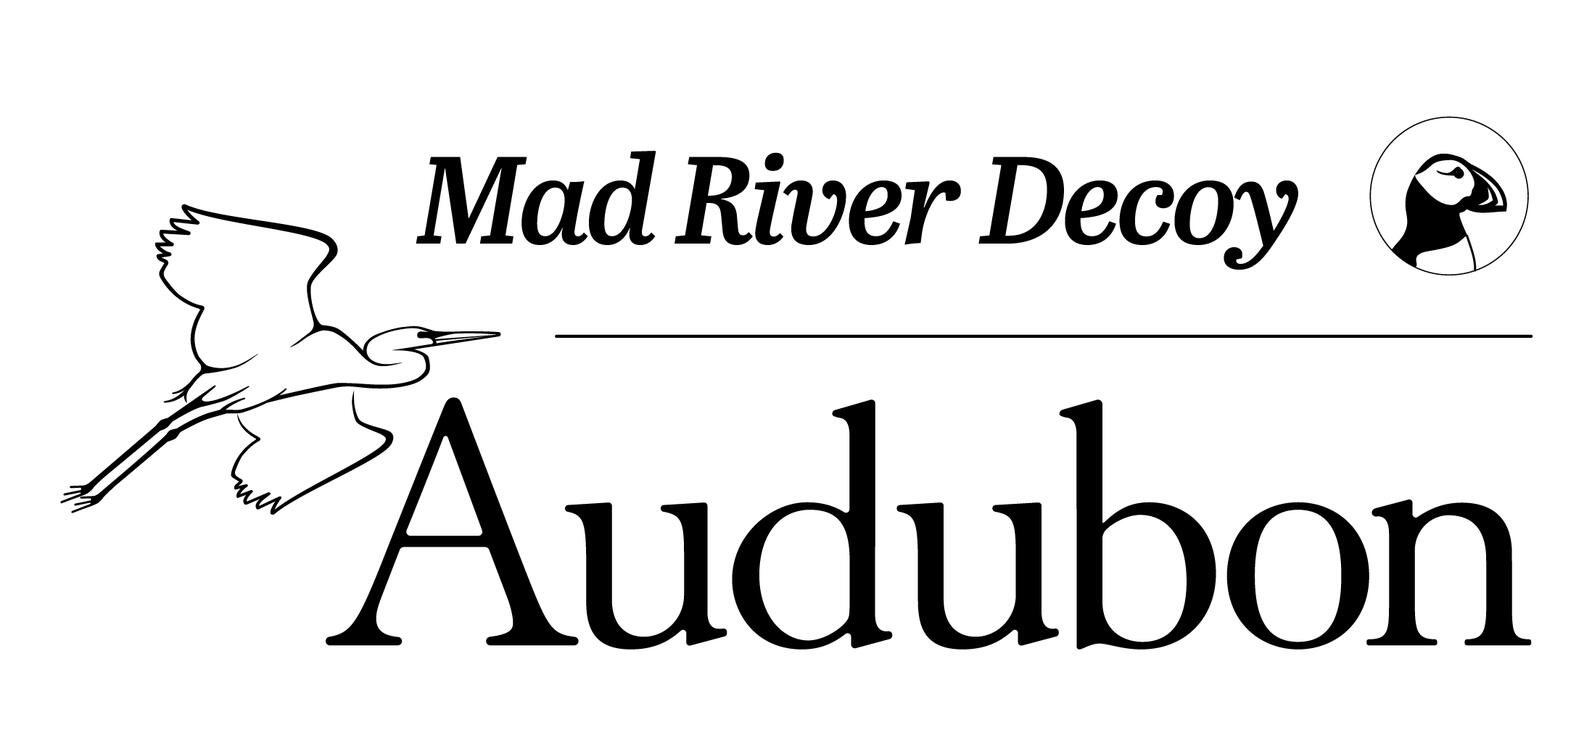 Mad River Decoys by Audubon Rectangle Logo